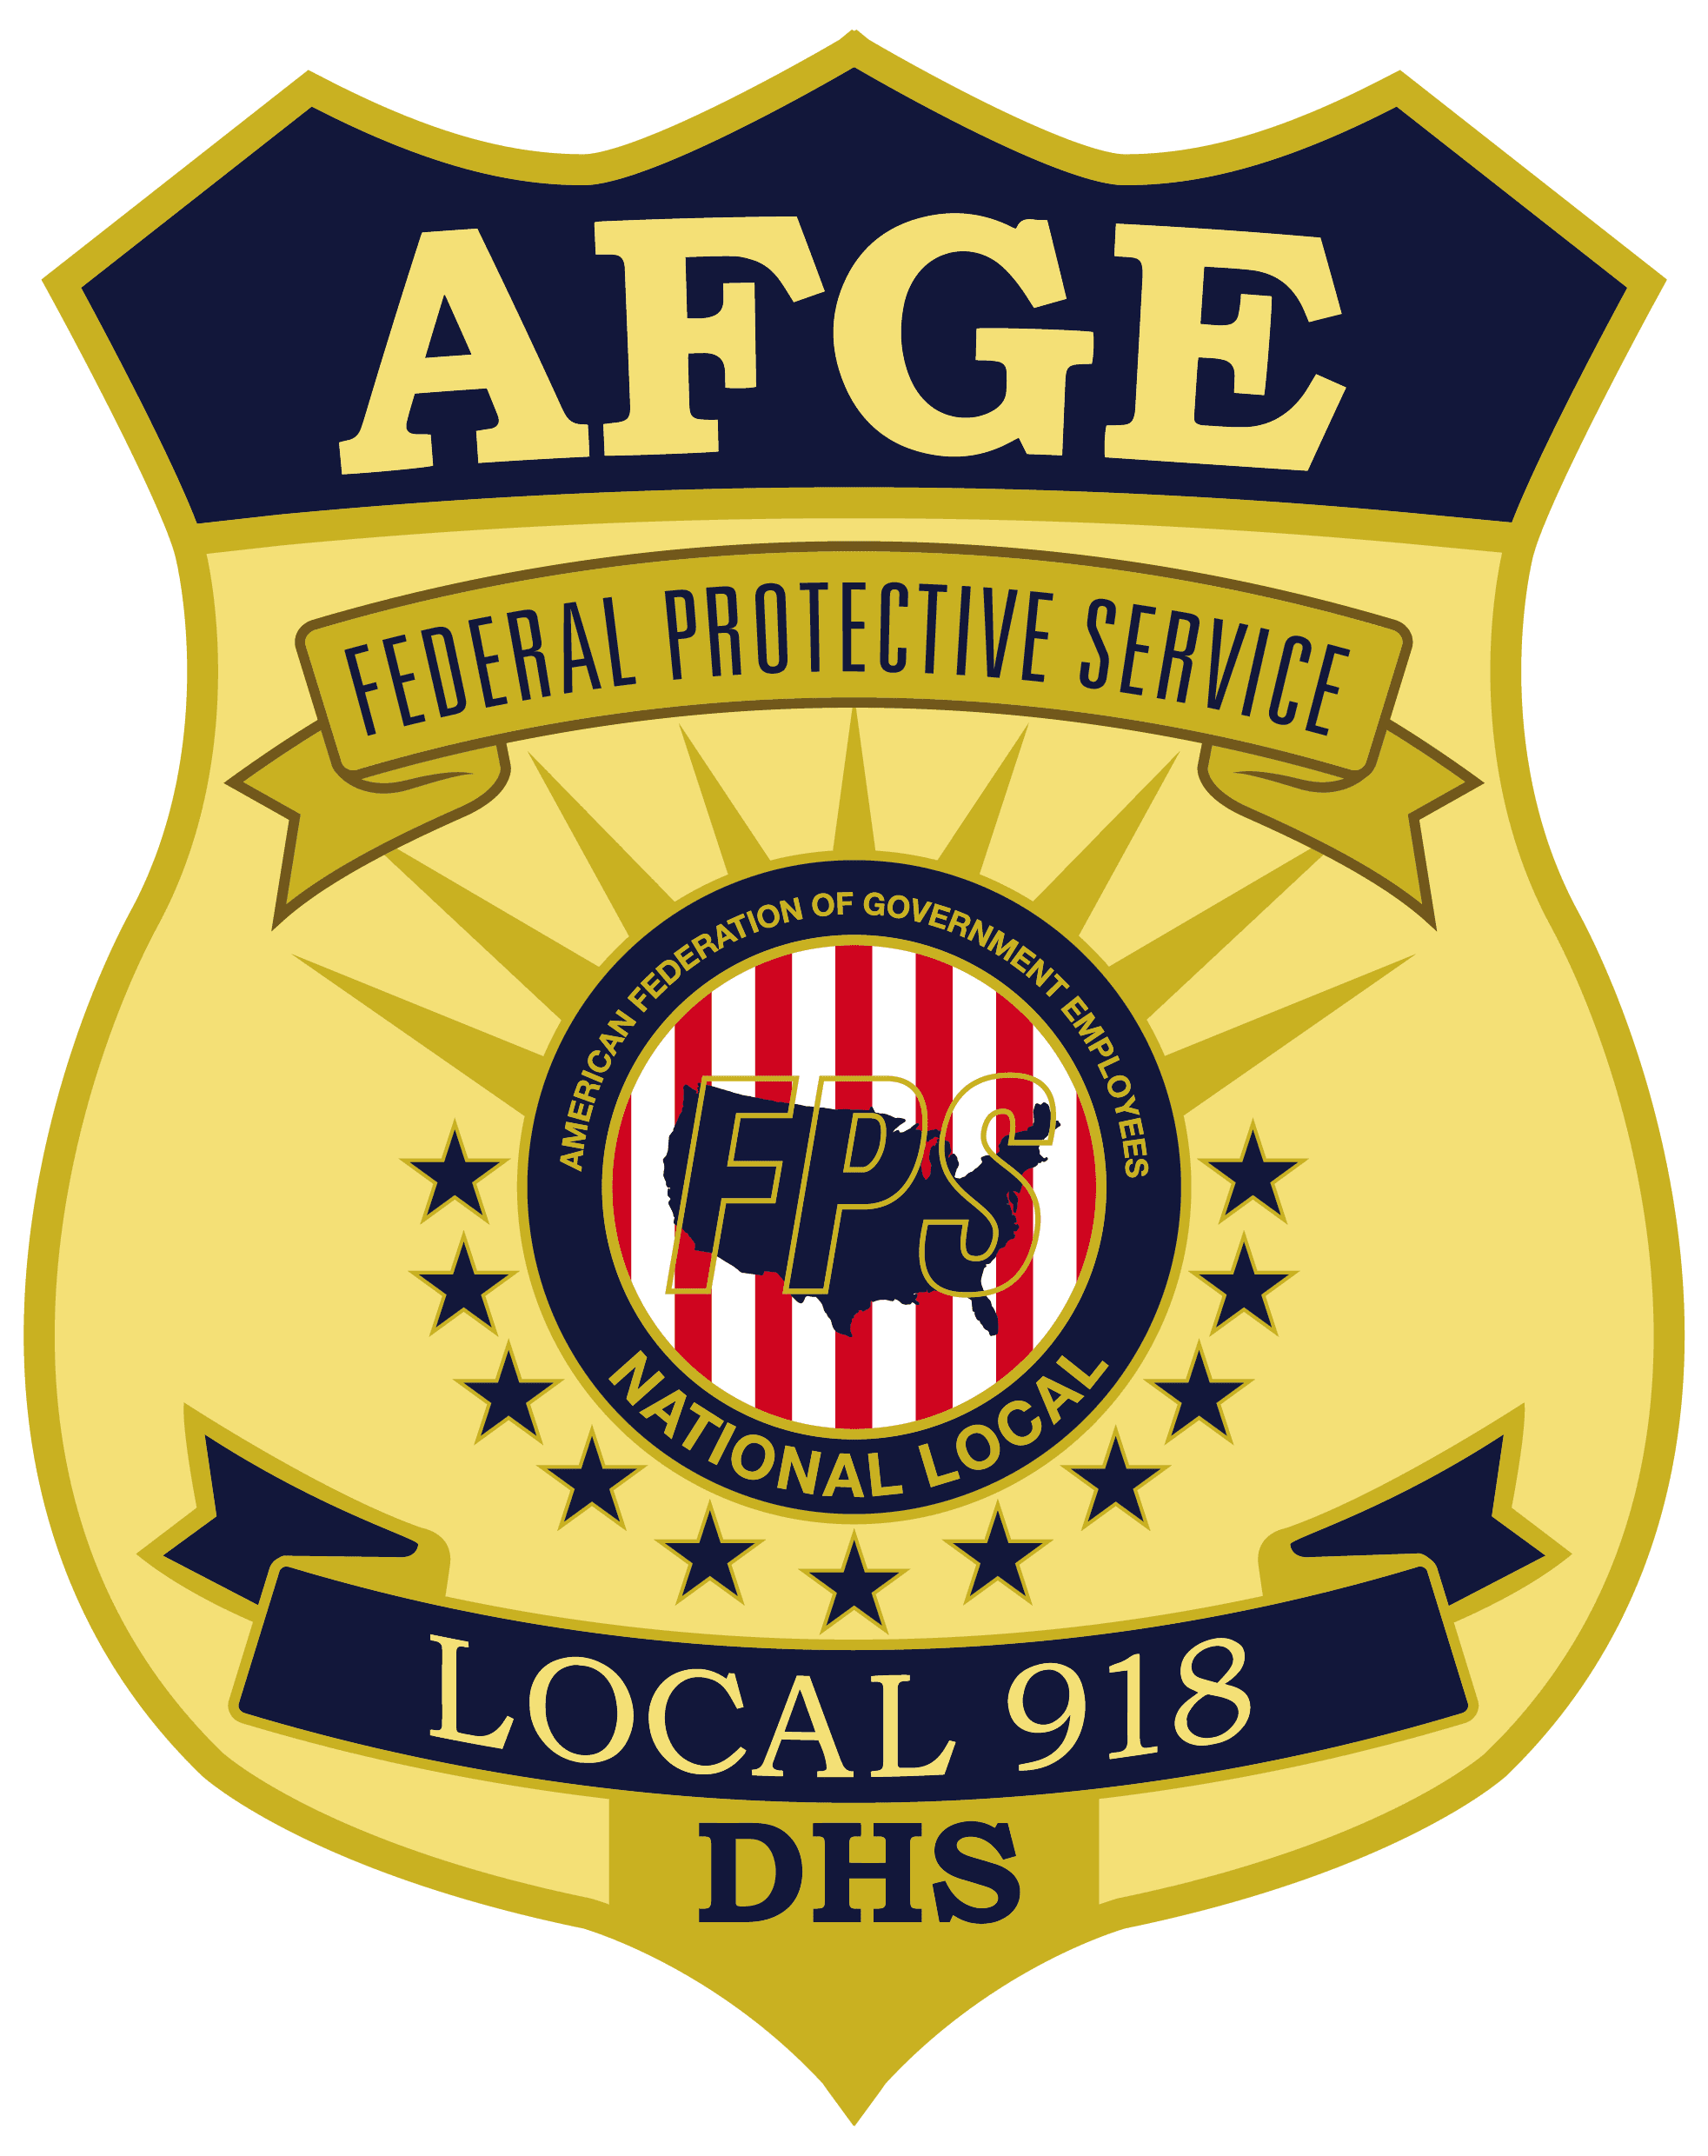 AFGE Logo - Exclusive Representation, United States